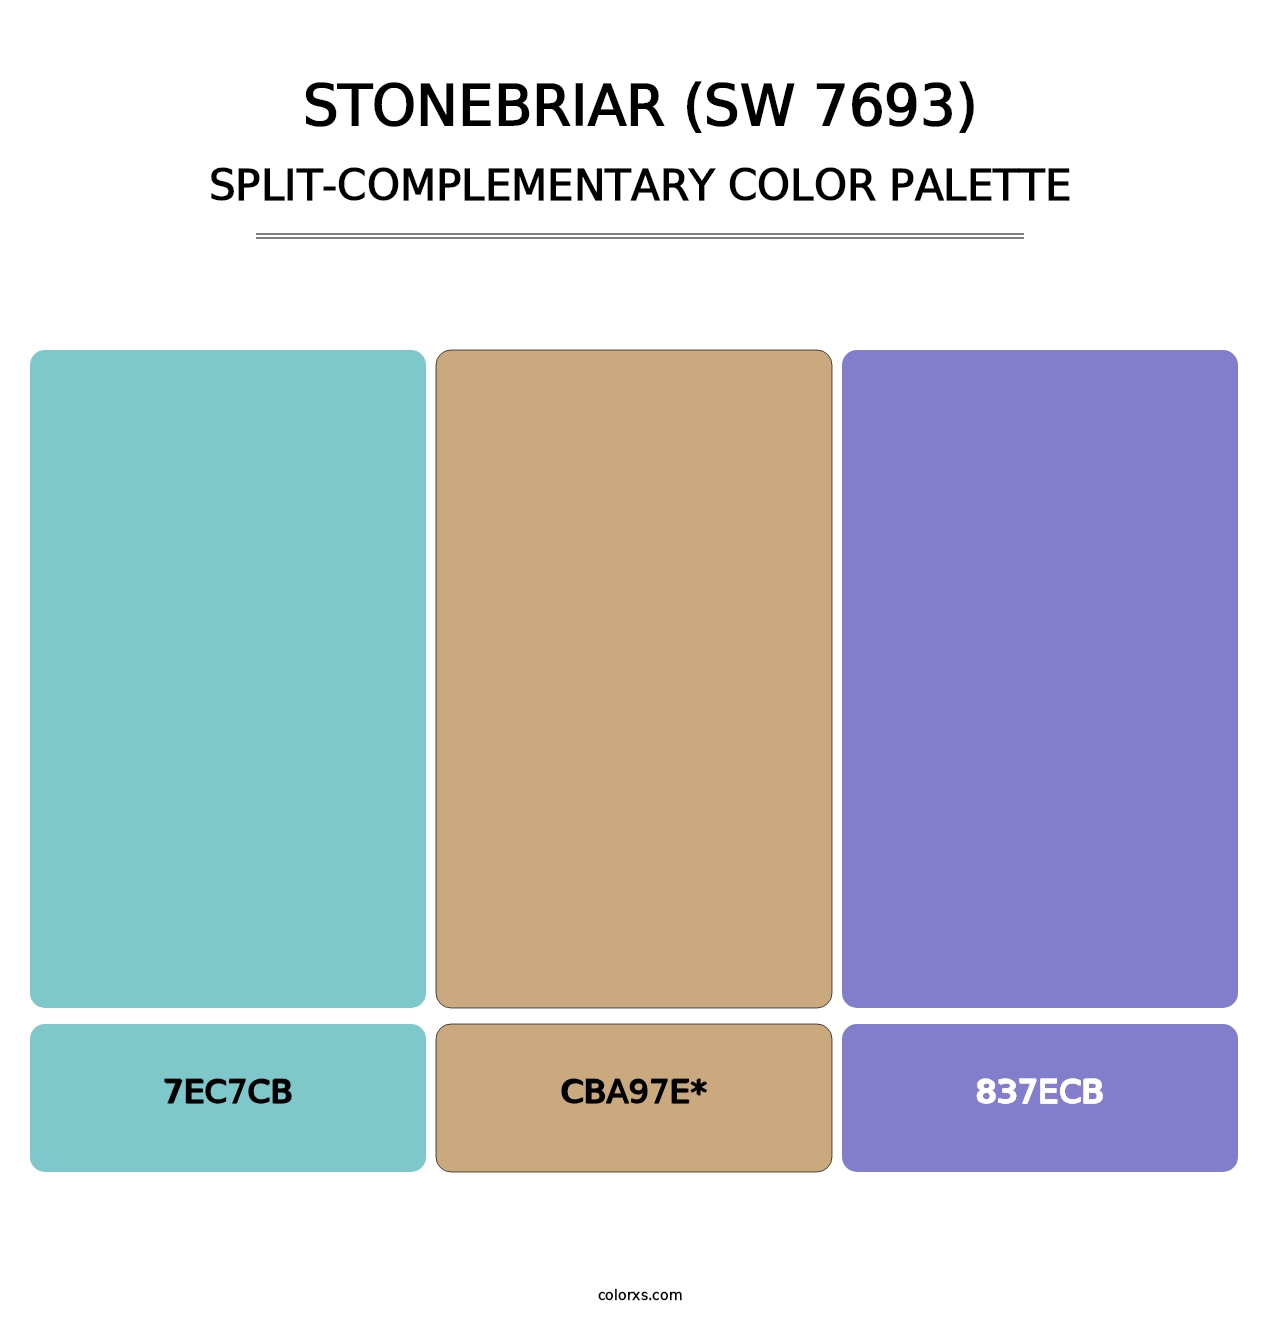 Stonebriar (SW 7693) - Split-Complementary Color Palette